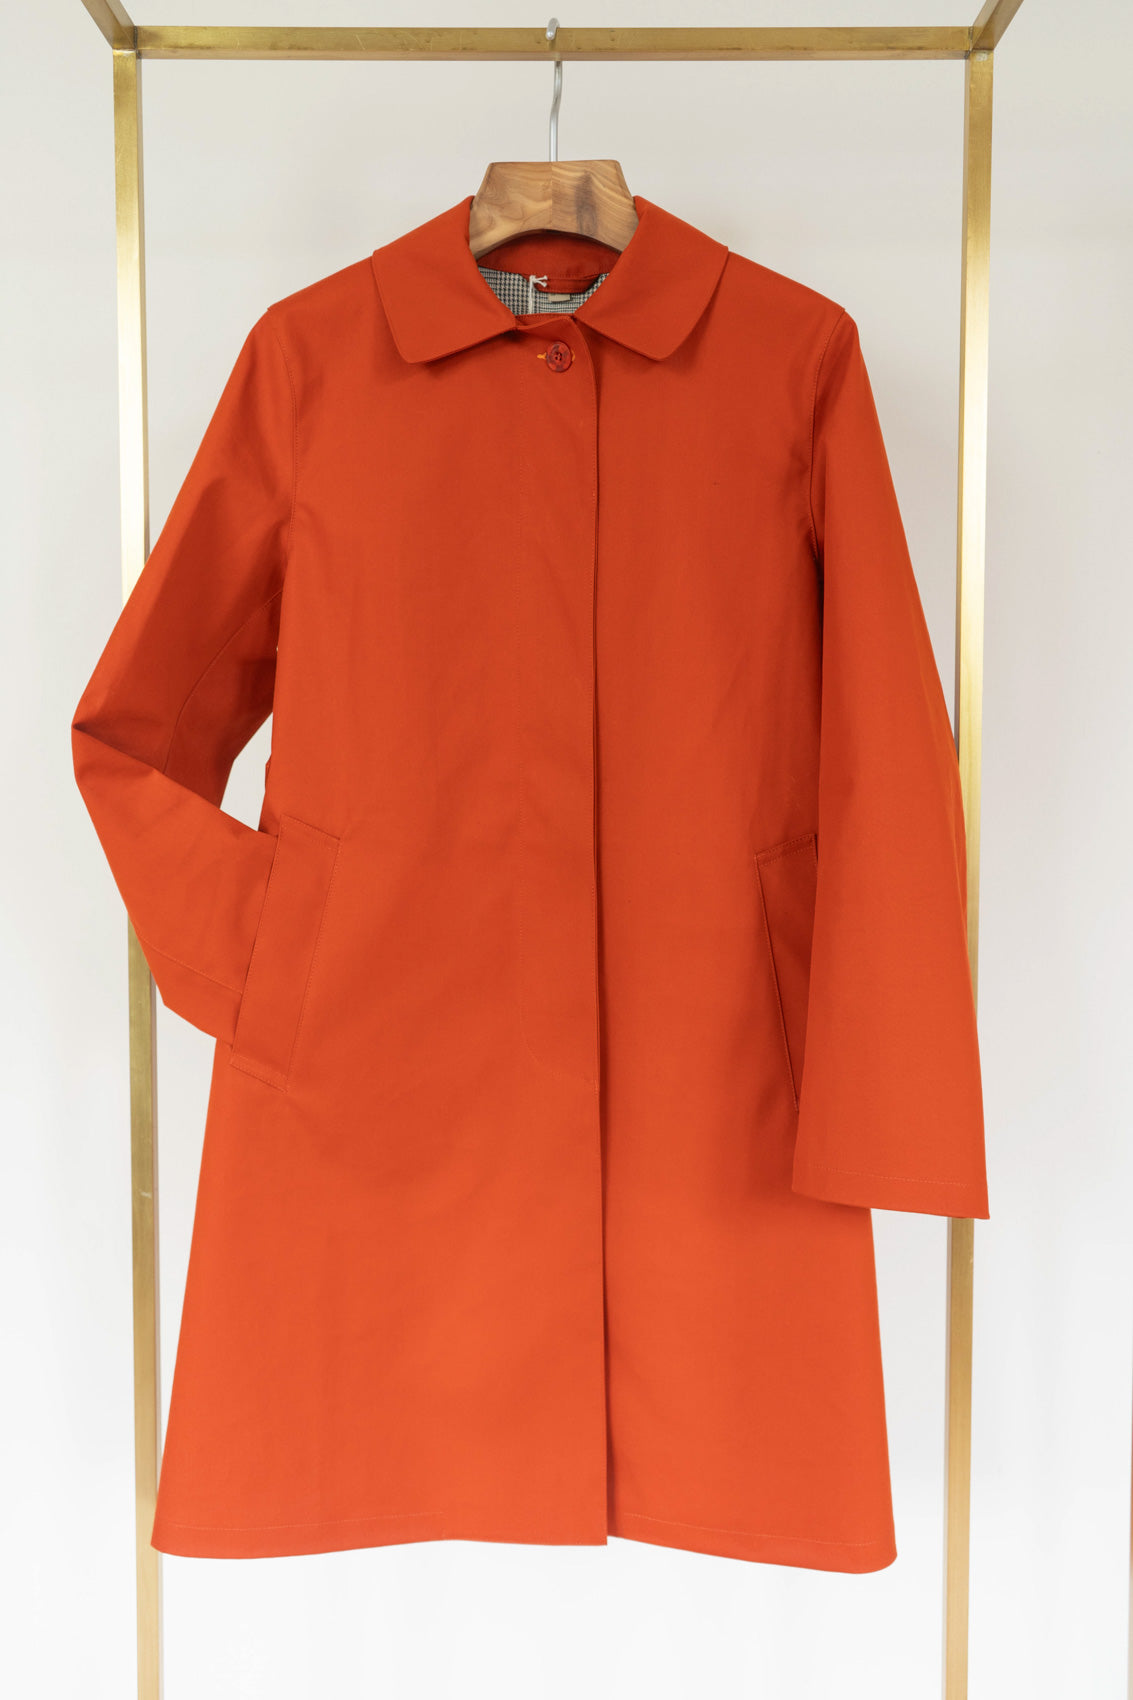 Terracotta Red Mack Coat-Coats & Jackets-STABLE of Ireland